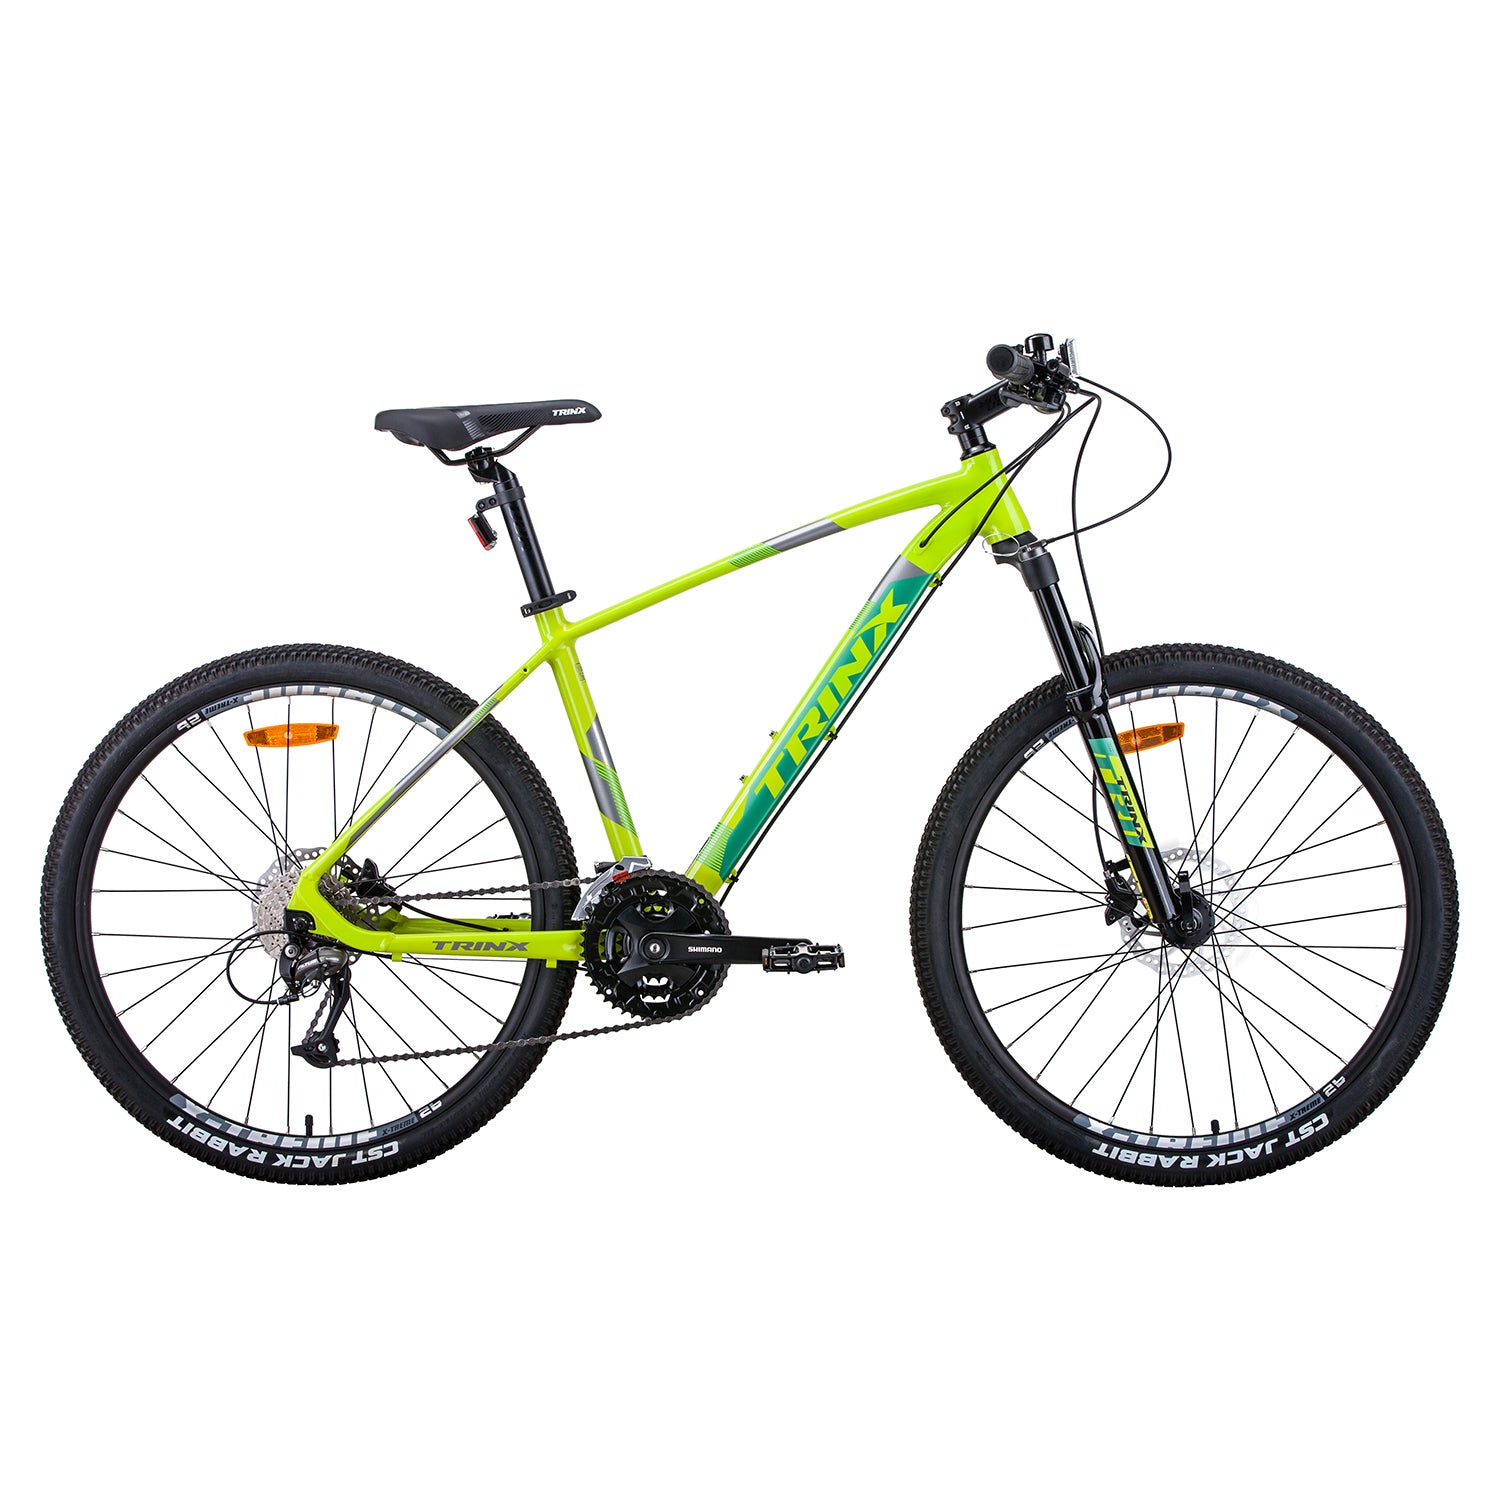 Trinx X1 MTB Mountain Bike Shimano Altus M370 27 Speed 17 Inches Frame Yellow/Grey Green